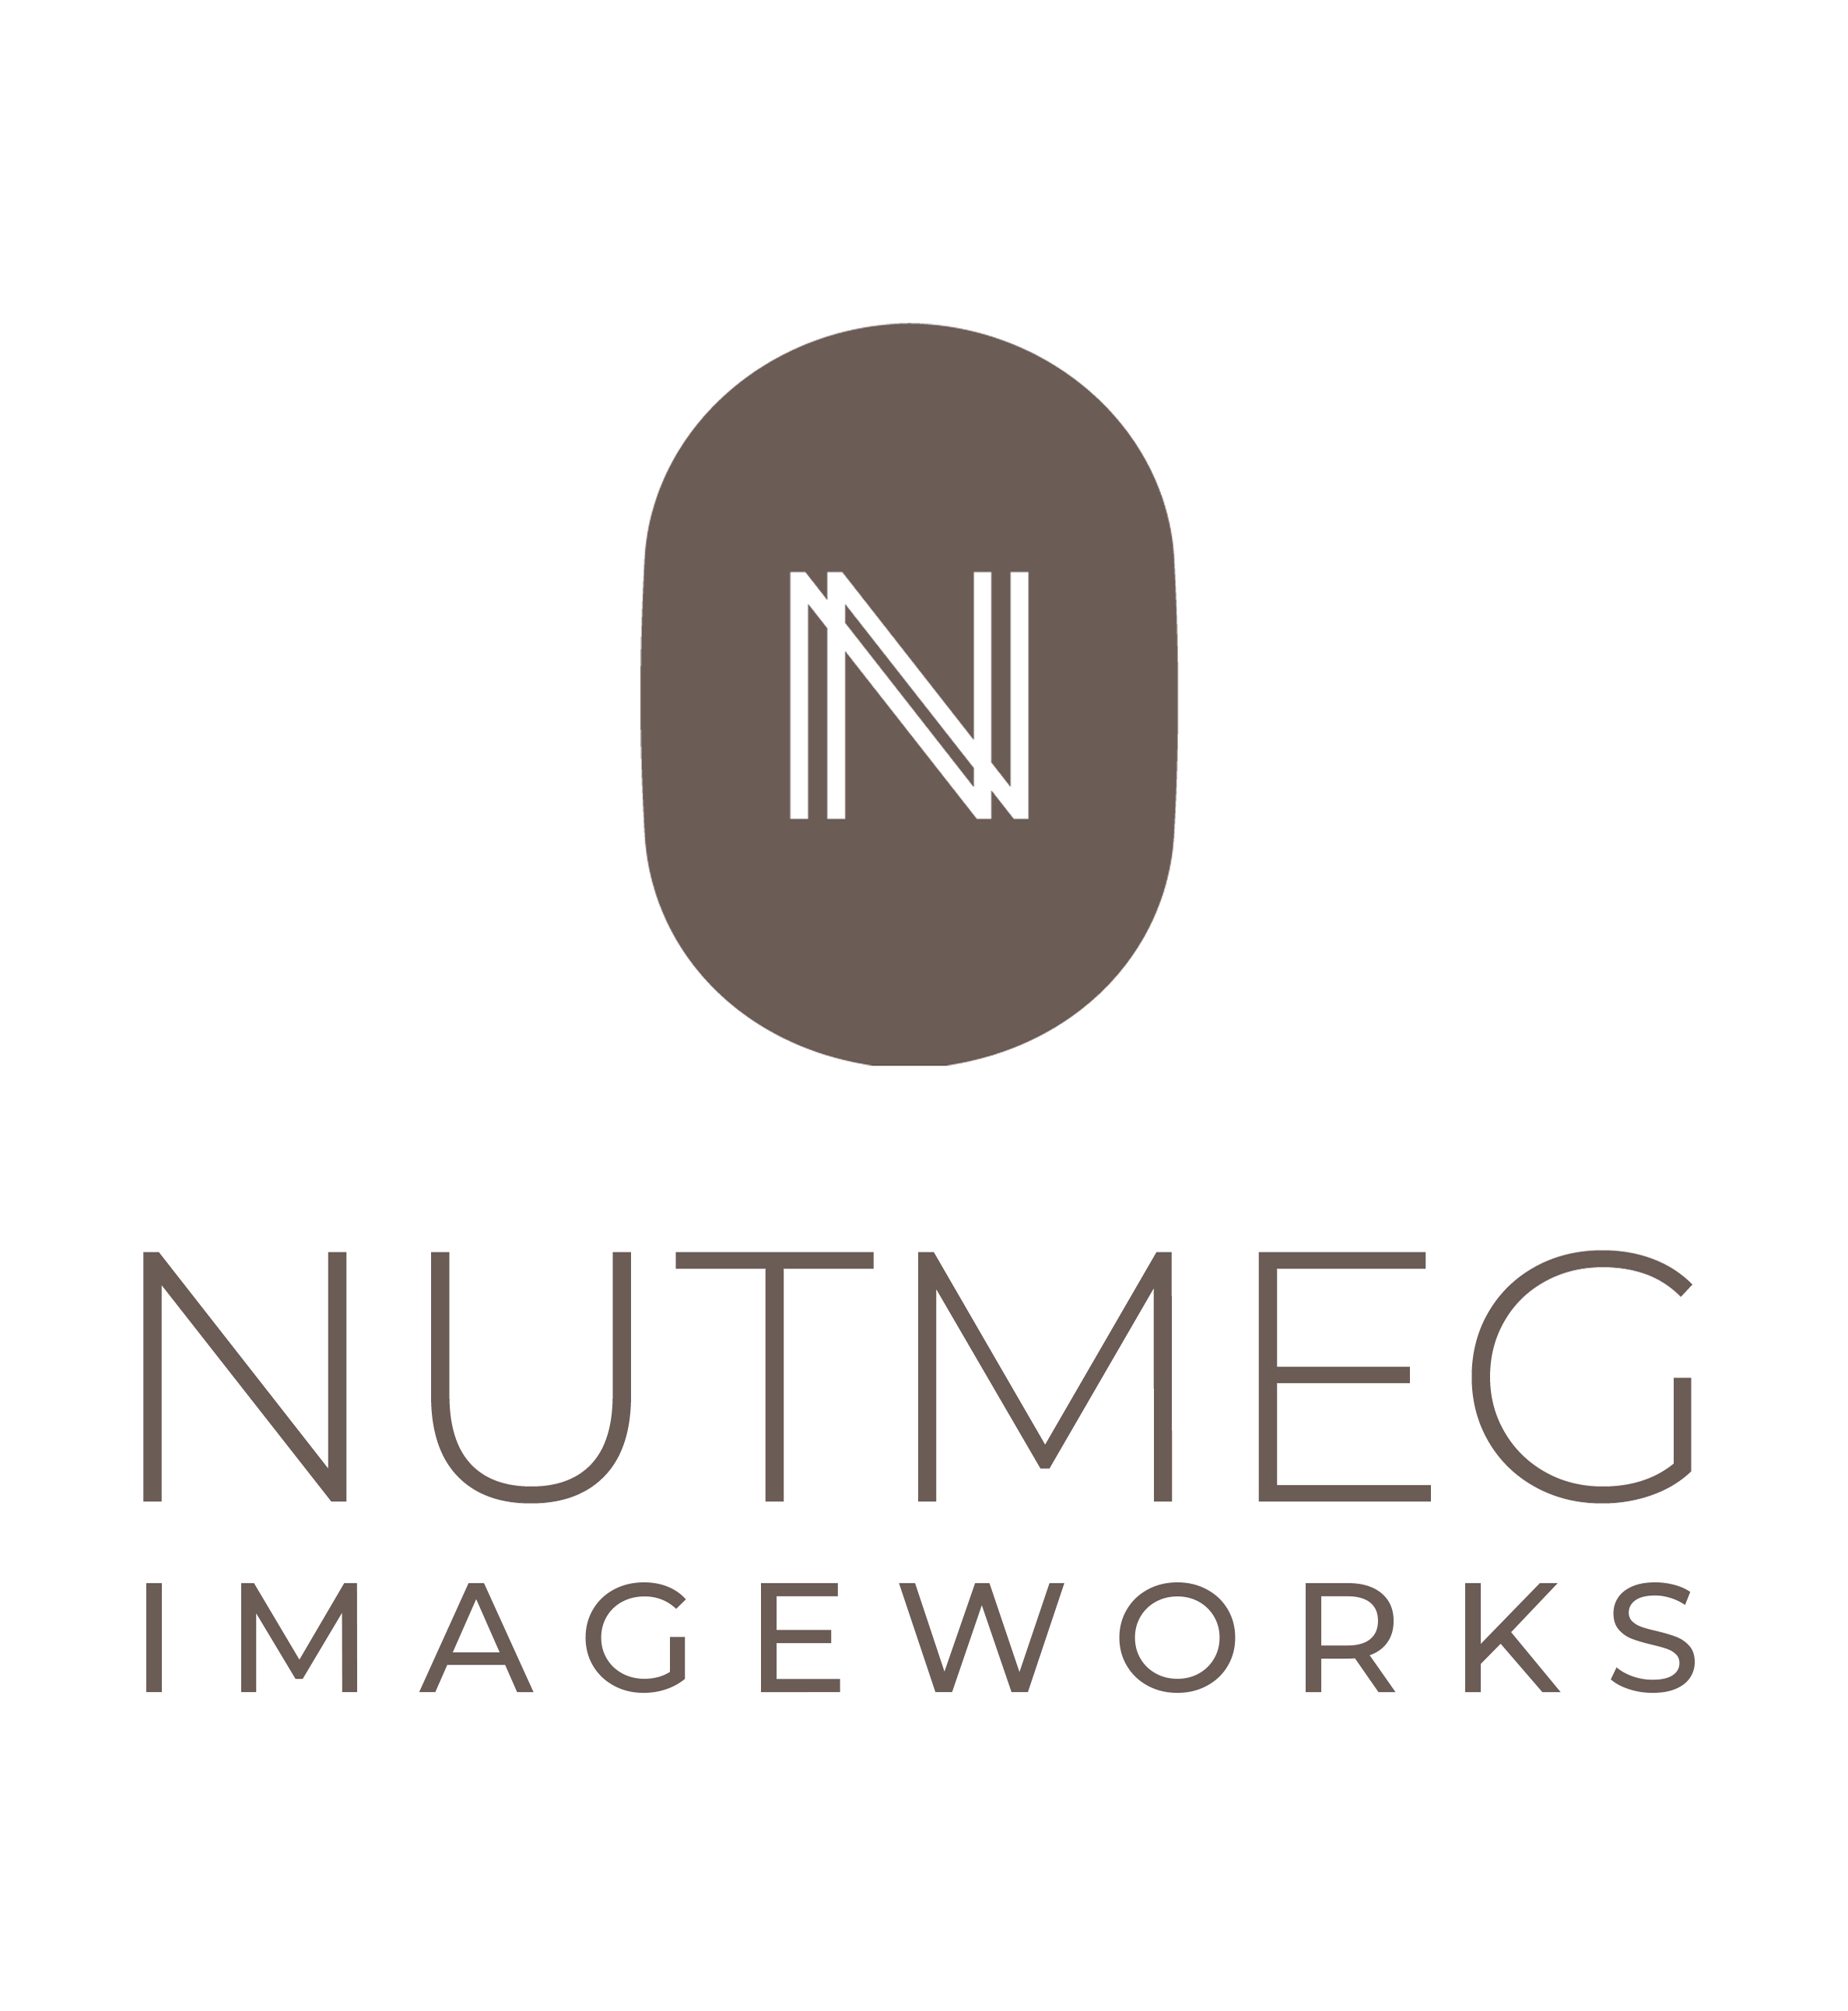 Nutmeg Imageworks